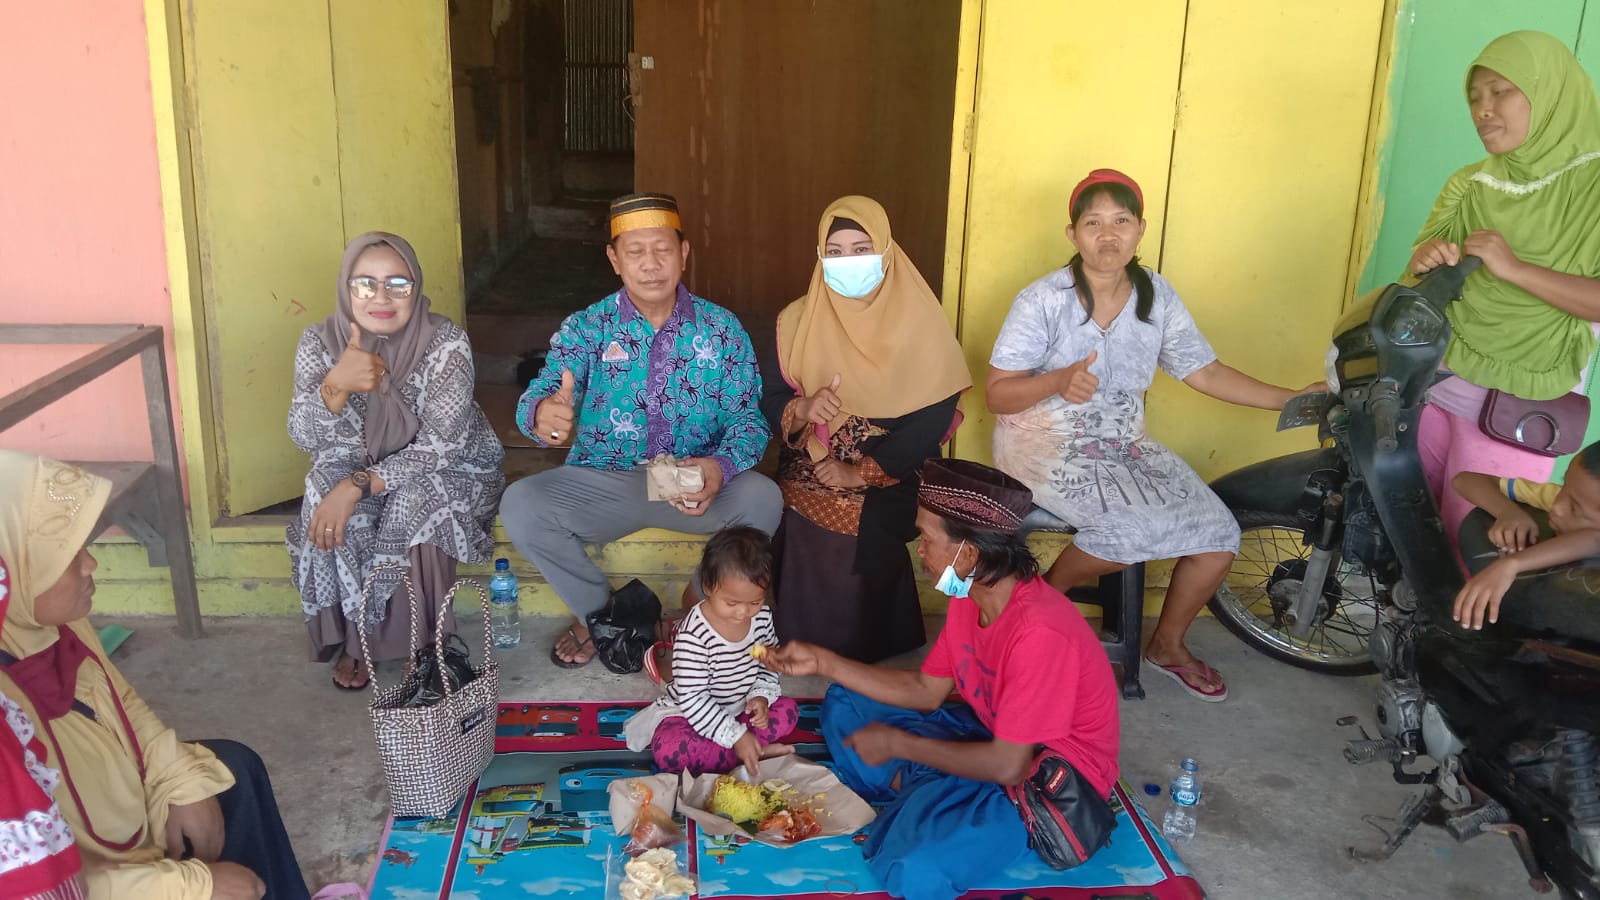 Hikma Kaltara Sediakan Rumah Layak Huni untuk Syamsul yang Sebelumnya Tinggal di Gubuk